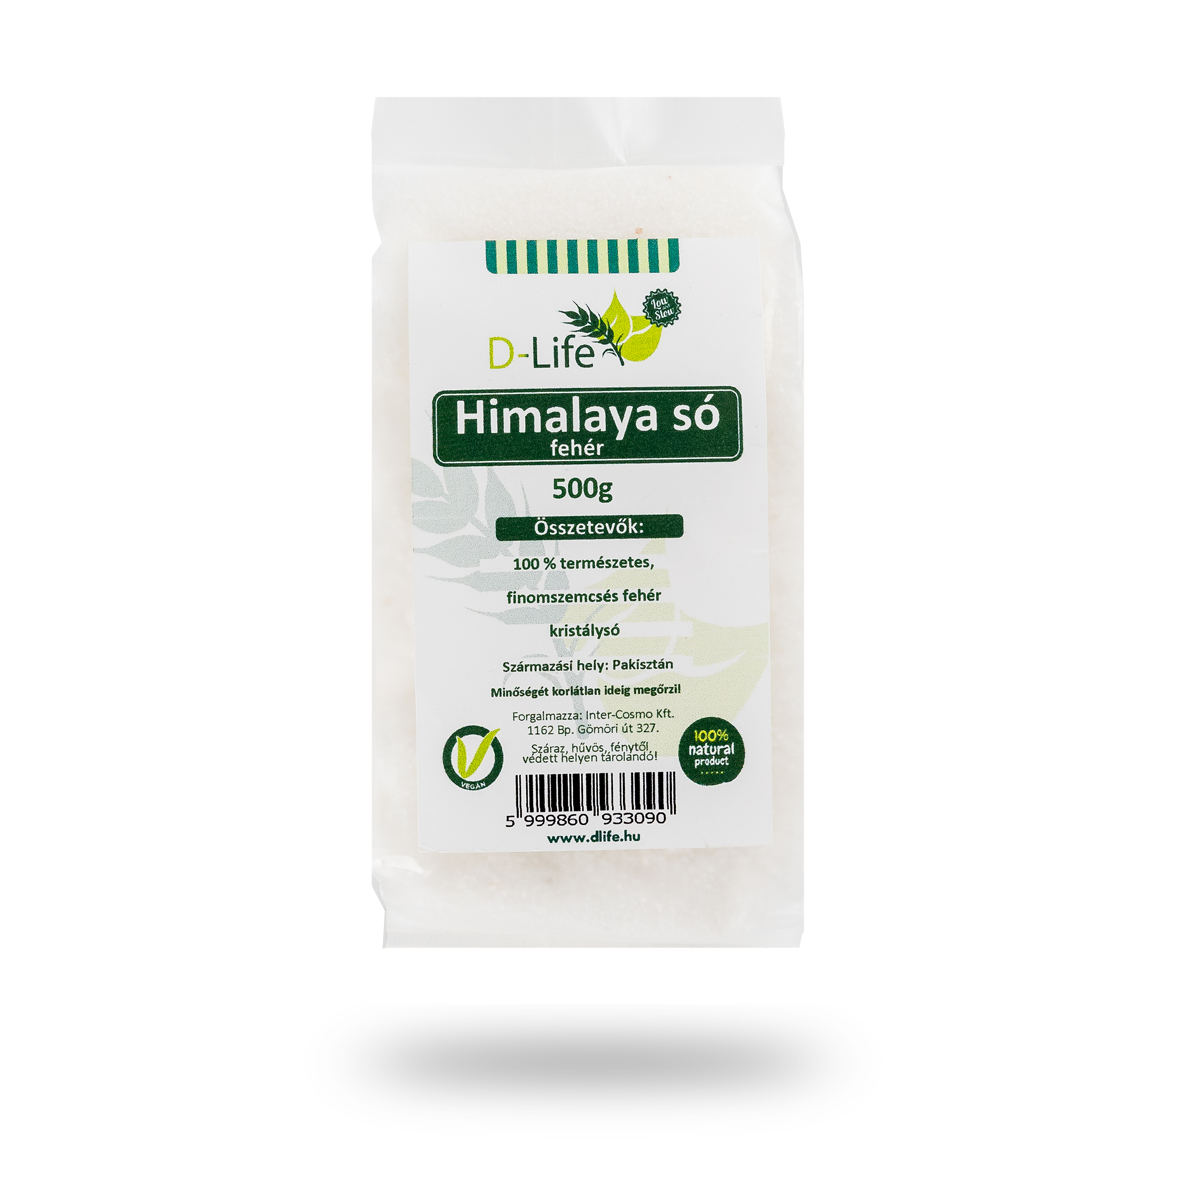 Himalaya salt white, not colored 500g